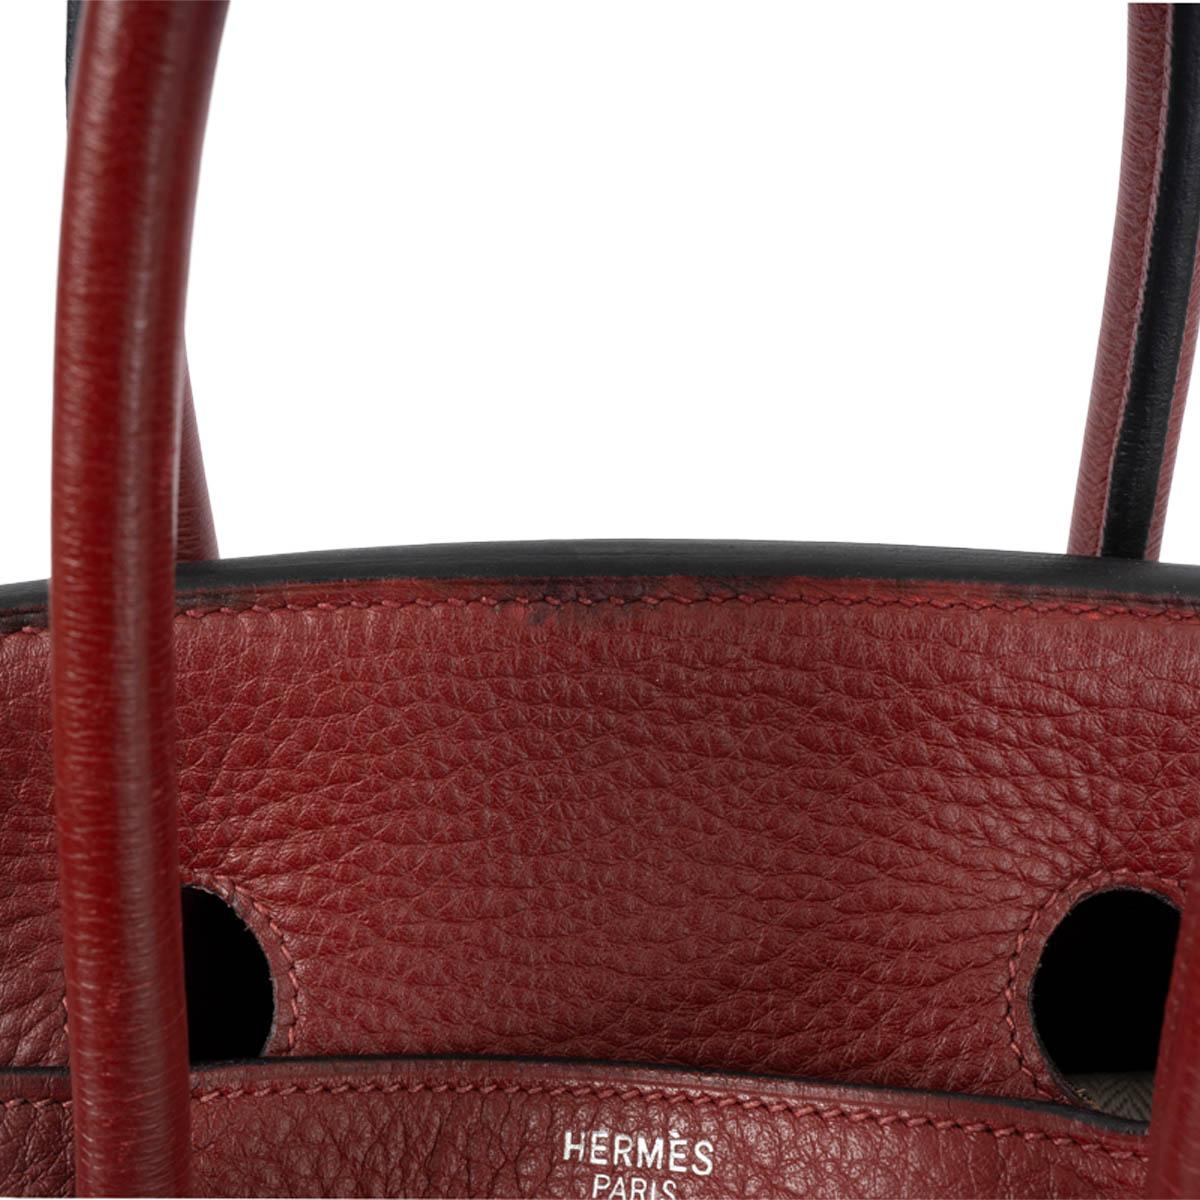 HERMES Rouge H burgundy Clemence leather BIRKIN 35 Bag w Palladium 5